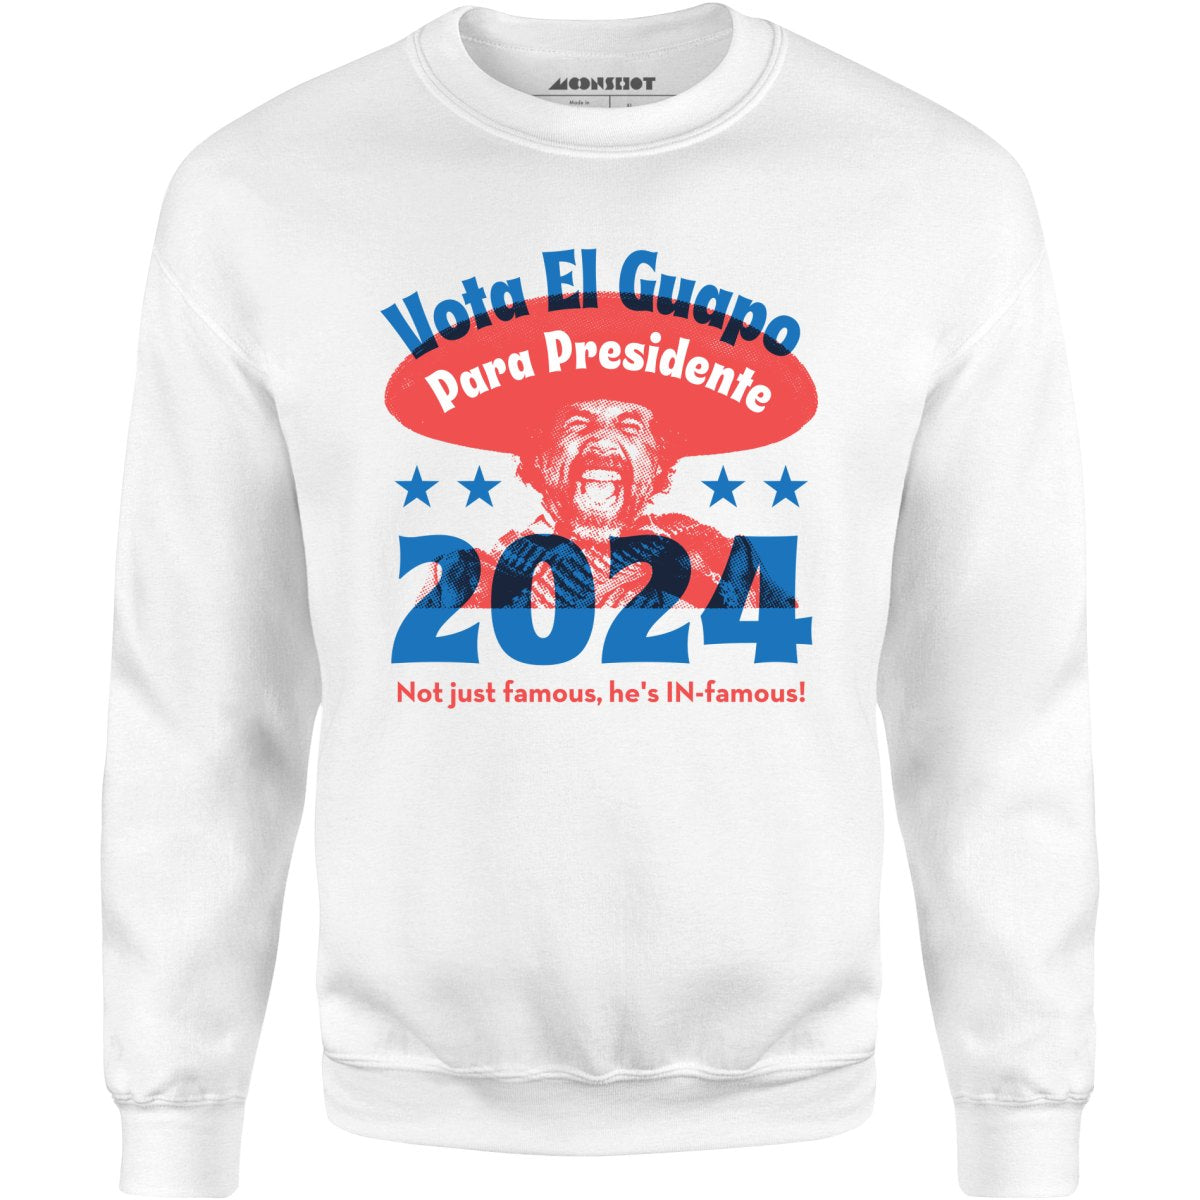 El Guapo 2024 - Unisex Sweatshirt